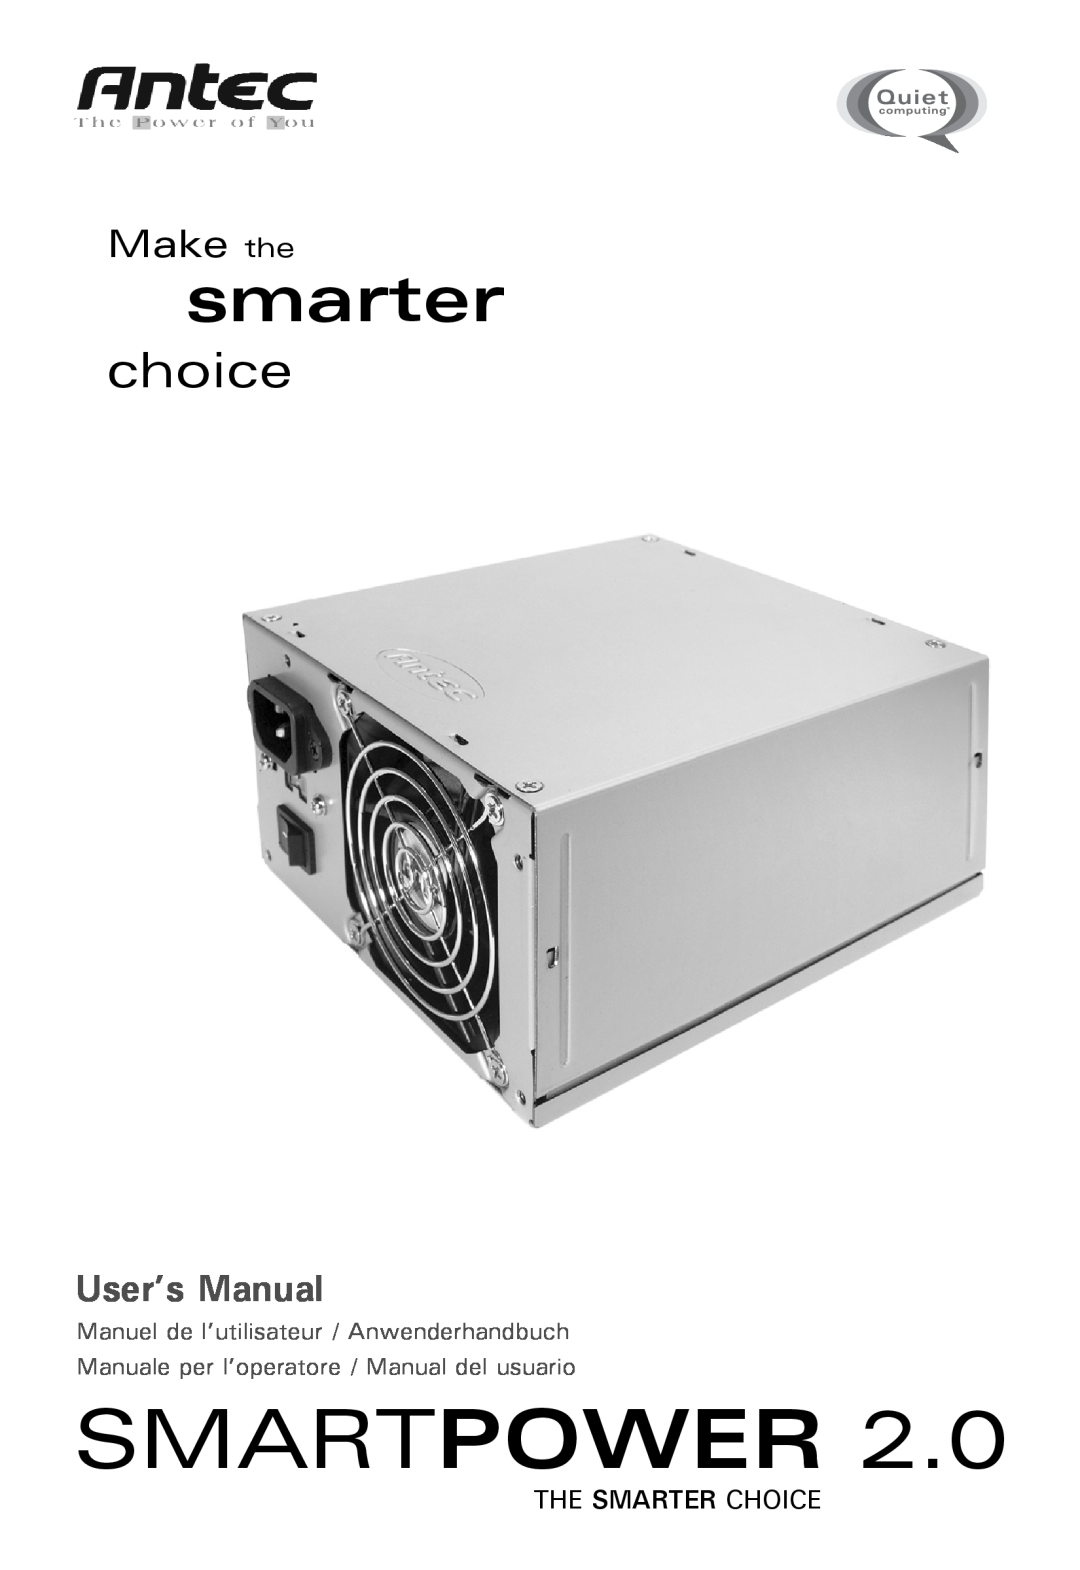 Antec 2.0 user manual Smartpower, smarter, choice, Make the, User’s Manual, The Smarter Choice 